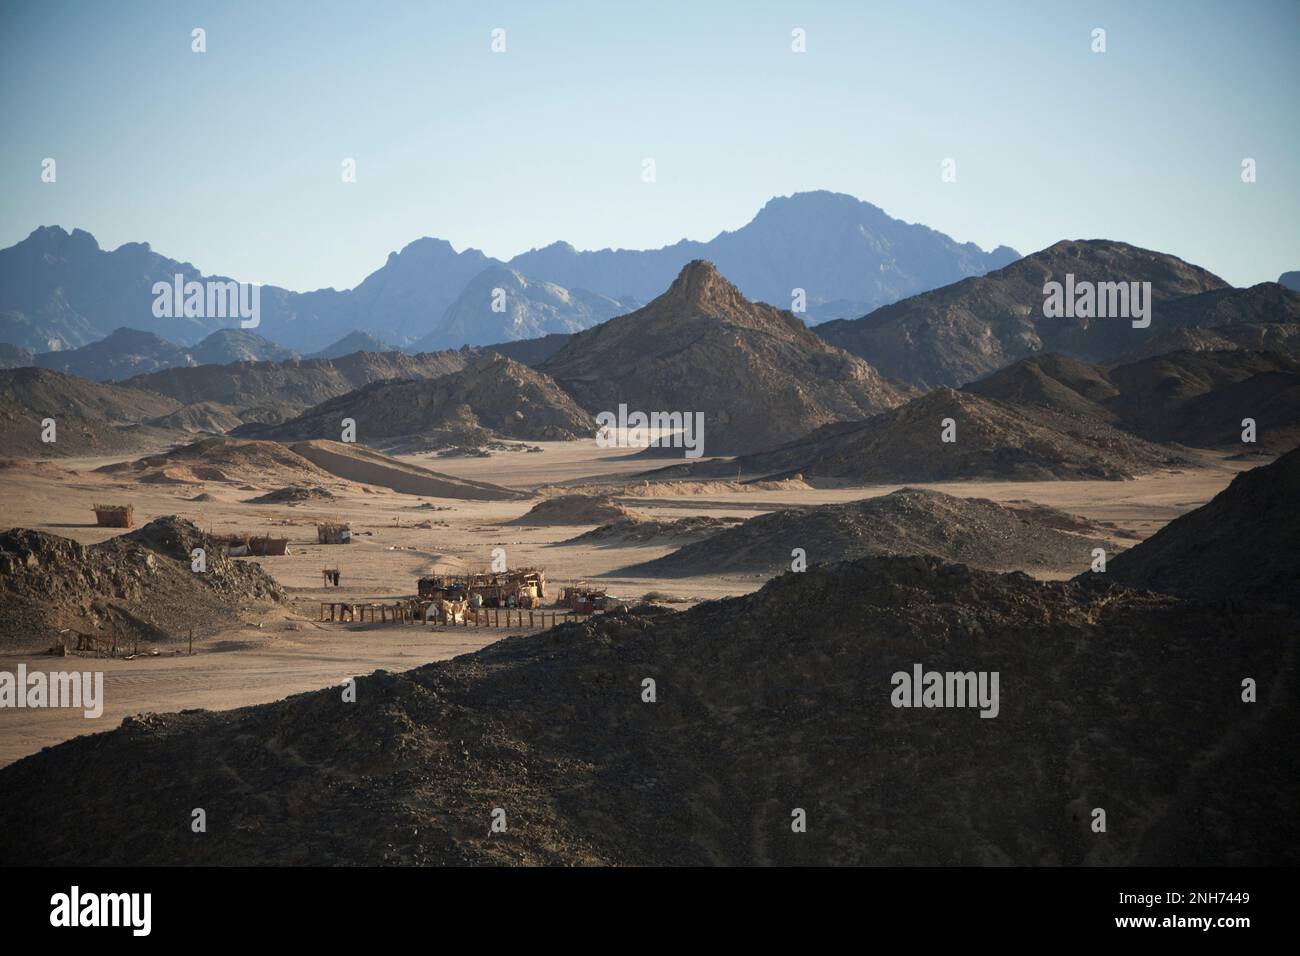 Mountain landscape and shacks, huts in Arabian desert, Egypt Stock Photo